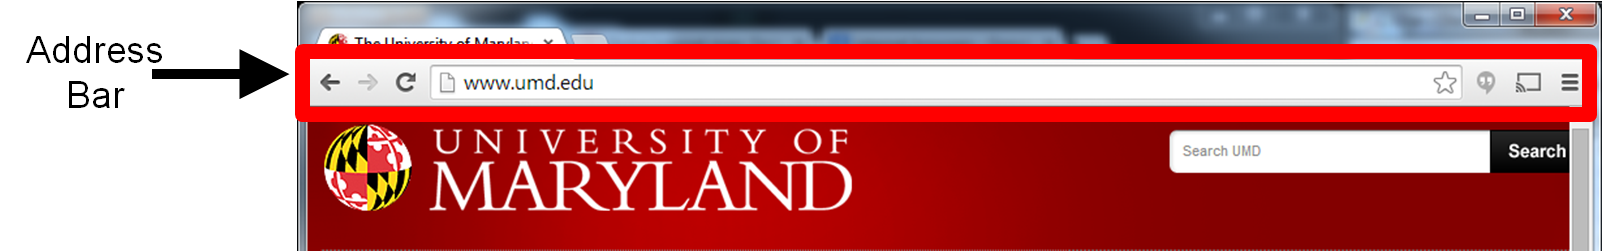 The Google Chrome Address Bar Showing the University of Maryland's Main Website's URL